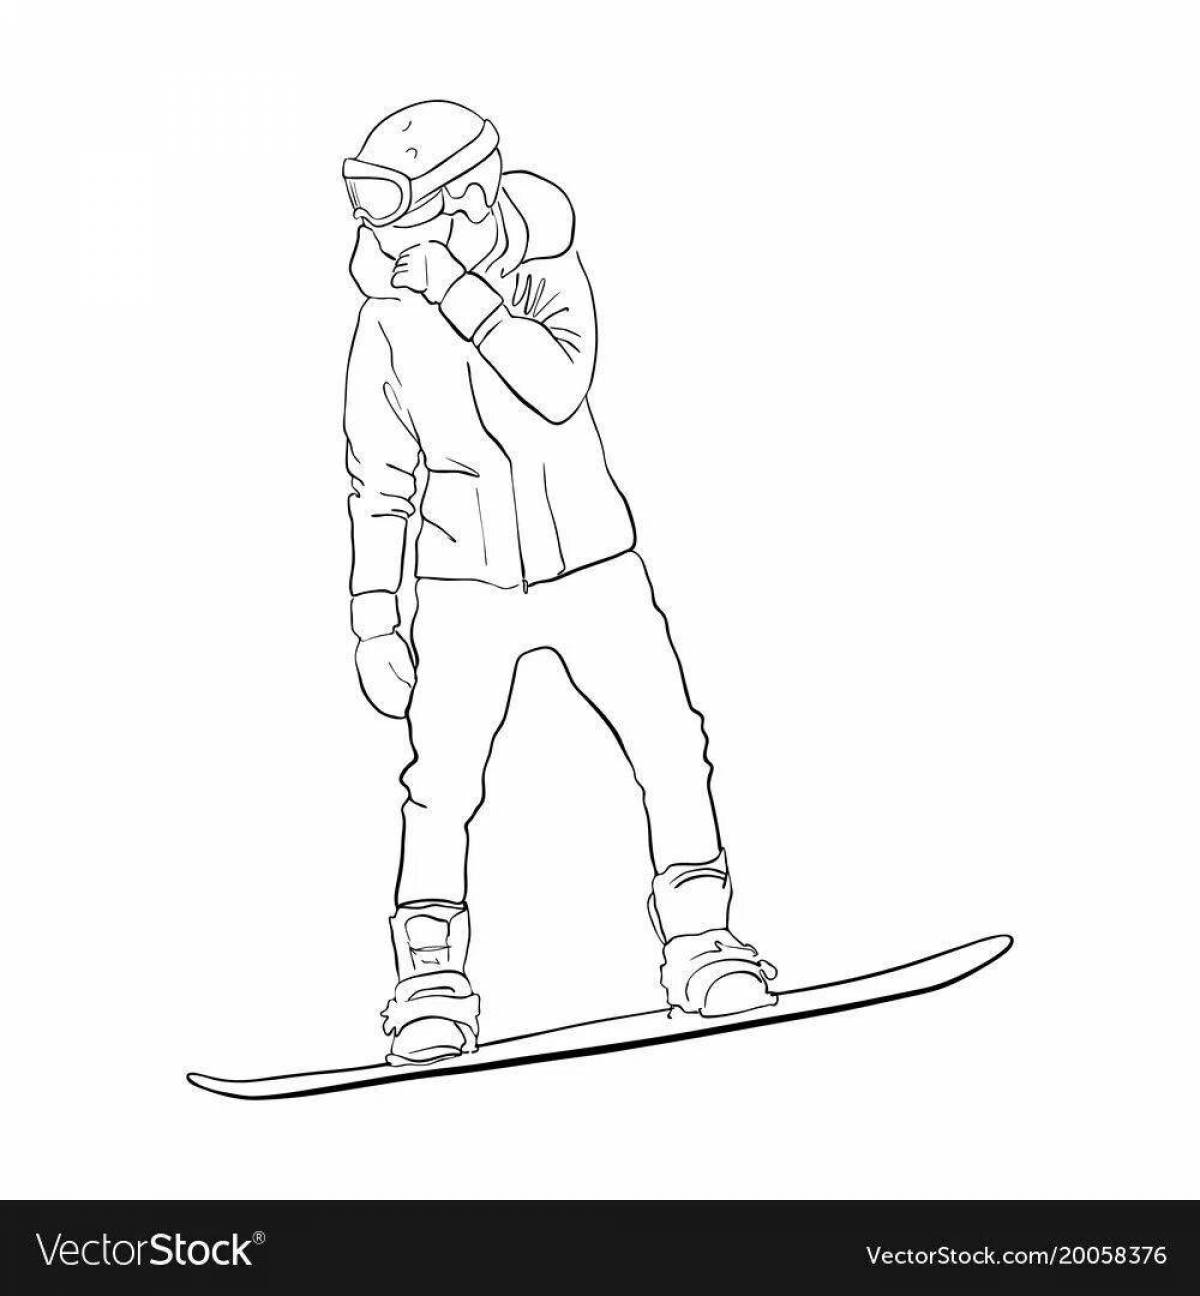 Joyful snowboard coloring for kids